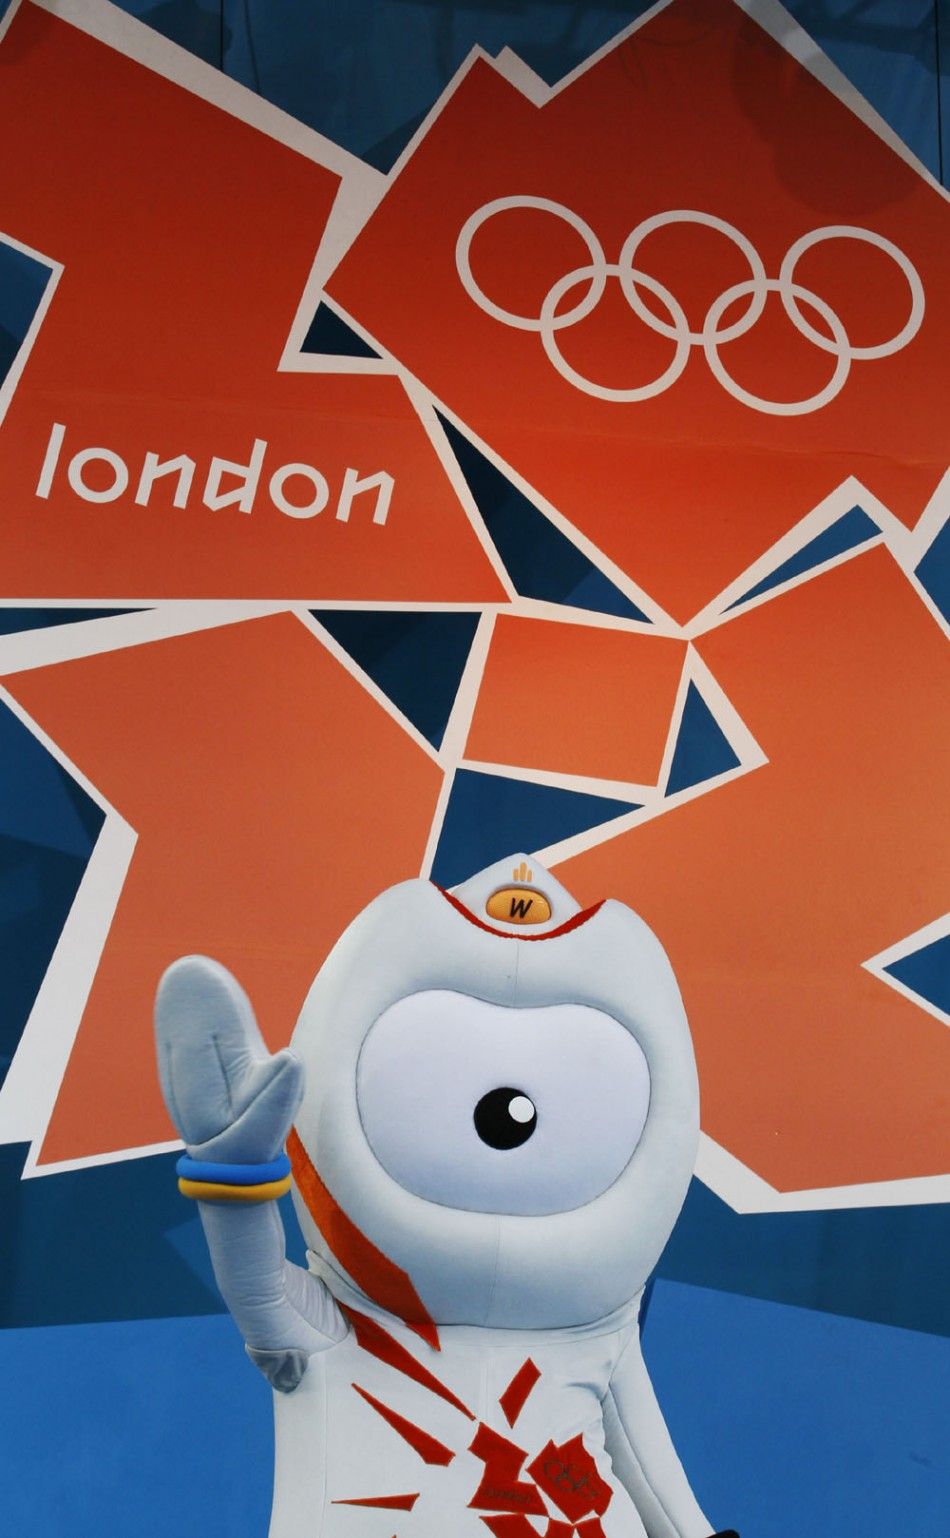 London 2012 Olympic Games Mascot Wenlock PHOTO